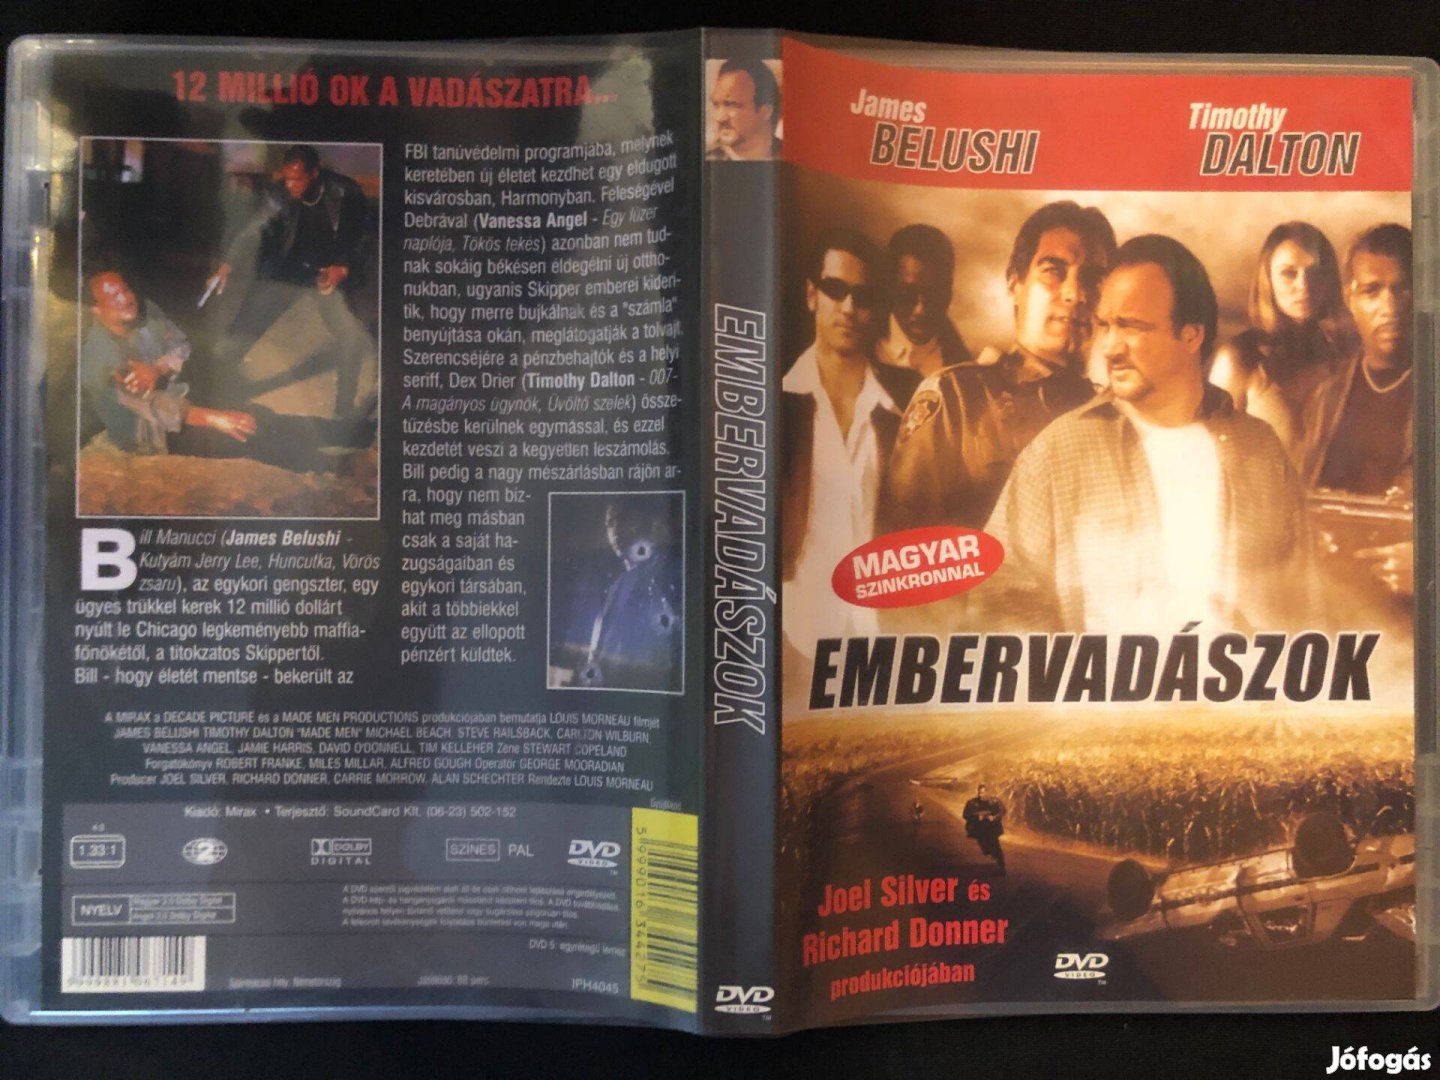 Embervadászok DVD (karcmentes, James Belushi, Timothy Dalton)